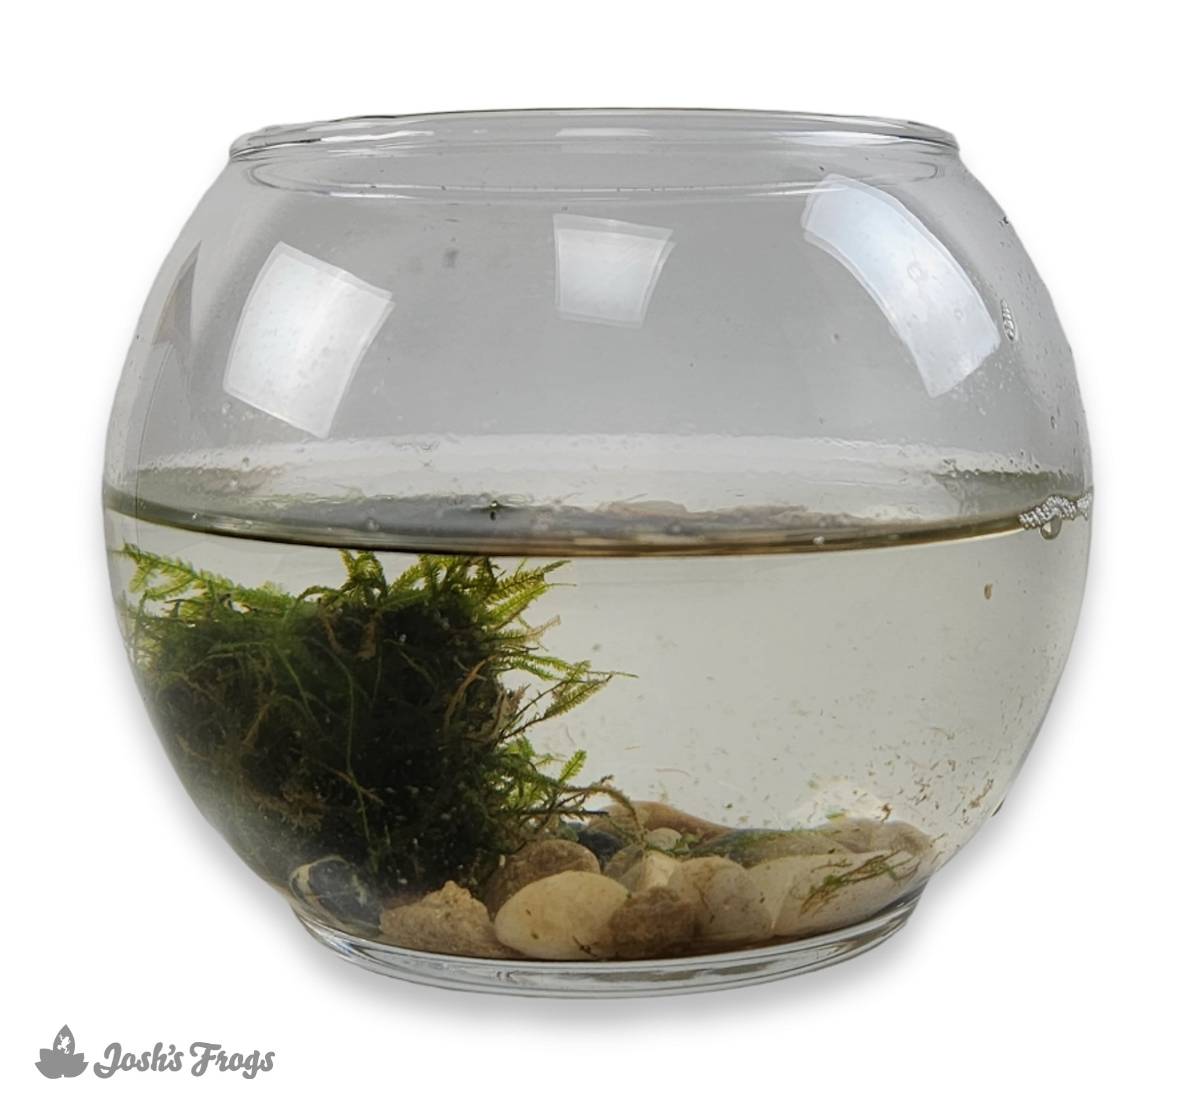 Nature Connection Kit: Do-It-Yourself Moss Ball Aquarium – Zen Habitats